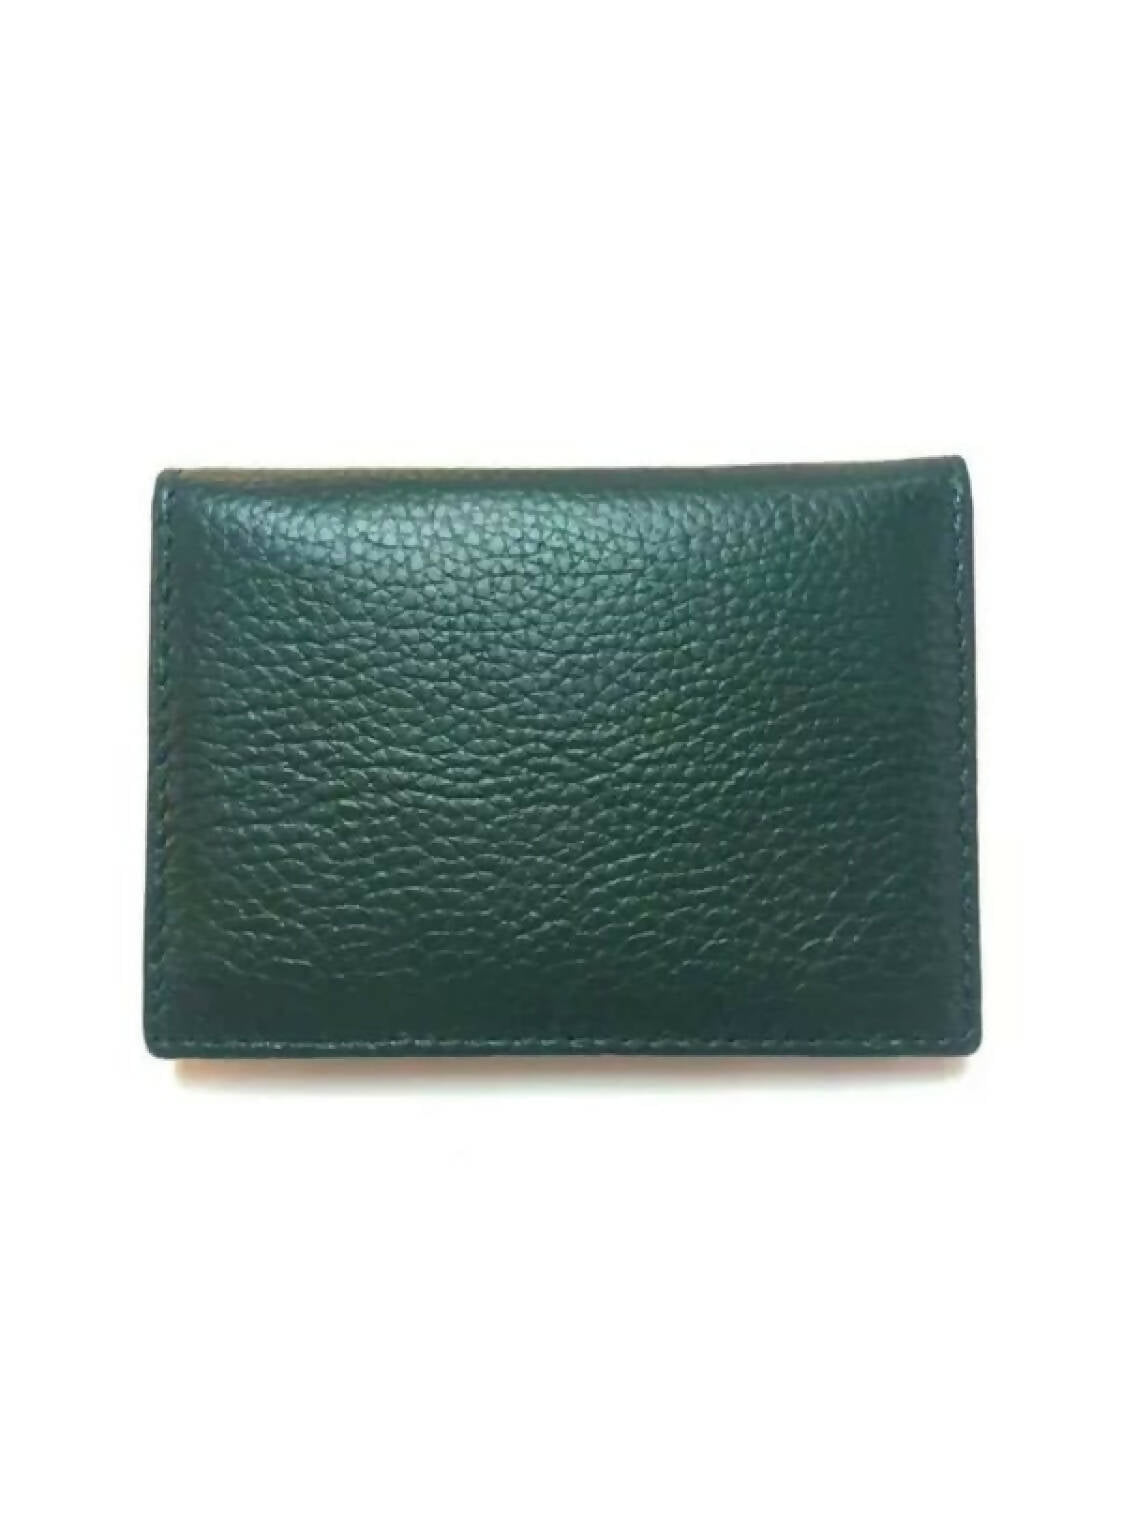 Customizable 5 Cards Wallet - Dark Green